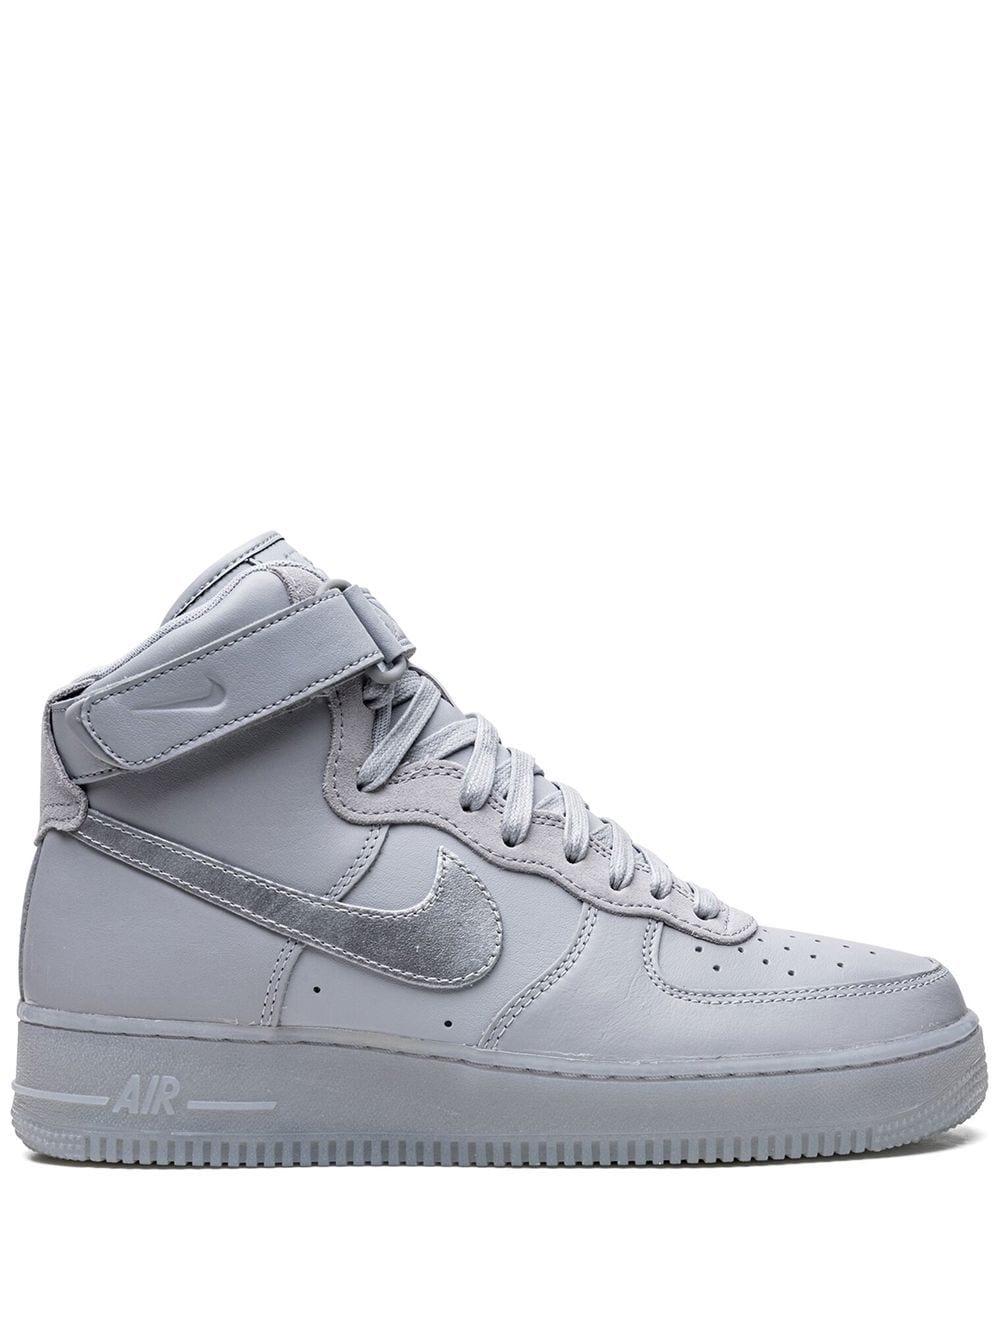 Nike Air Force 1 High '07 LV8 3 Sneakers - Farfetch